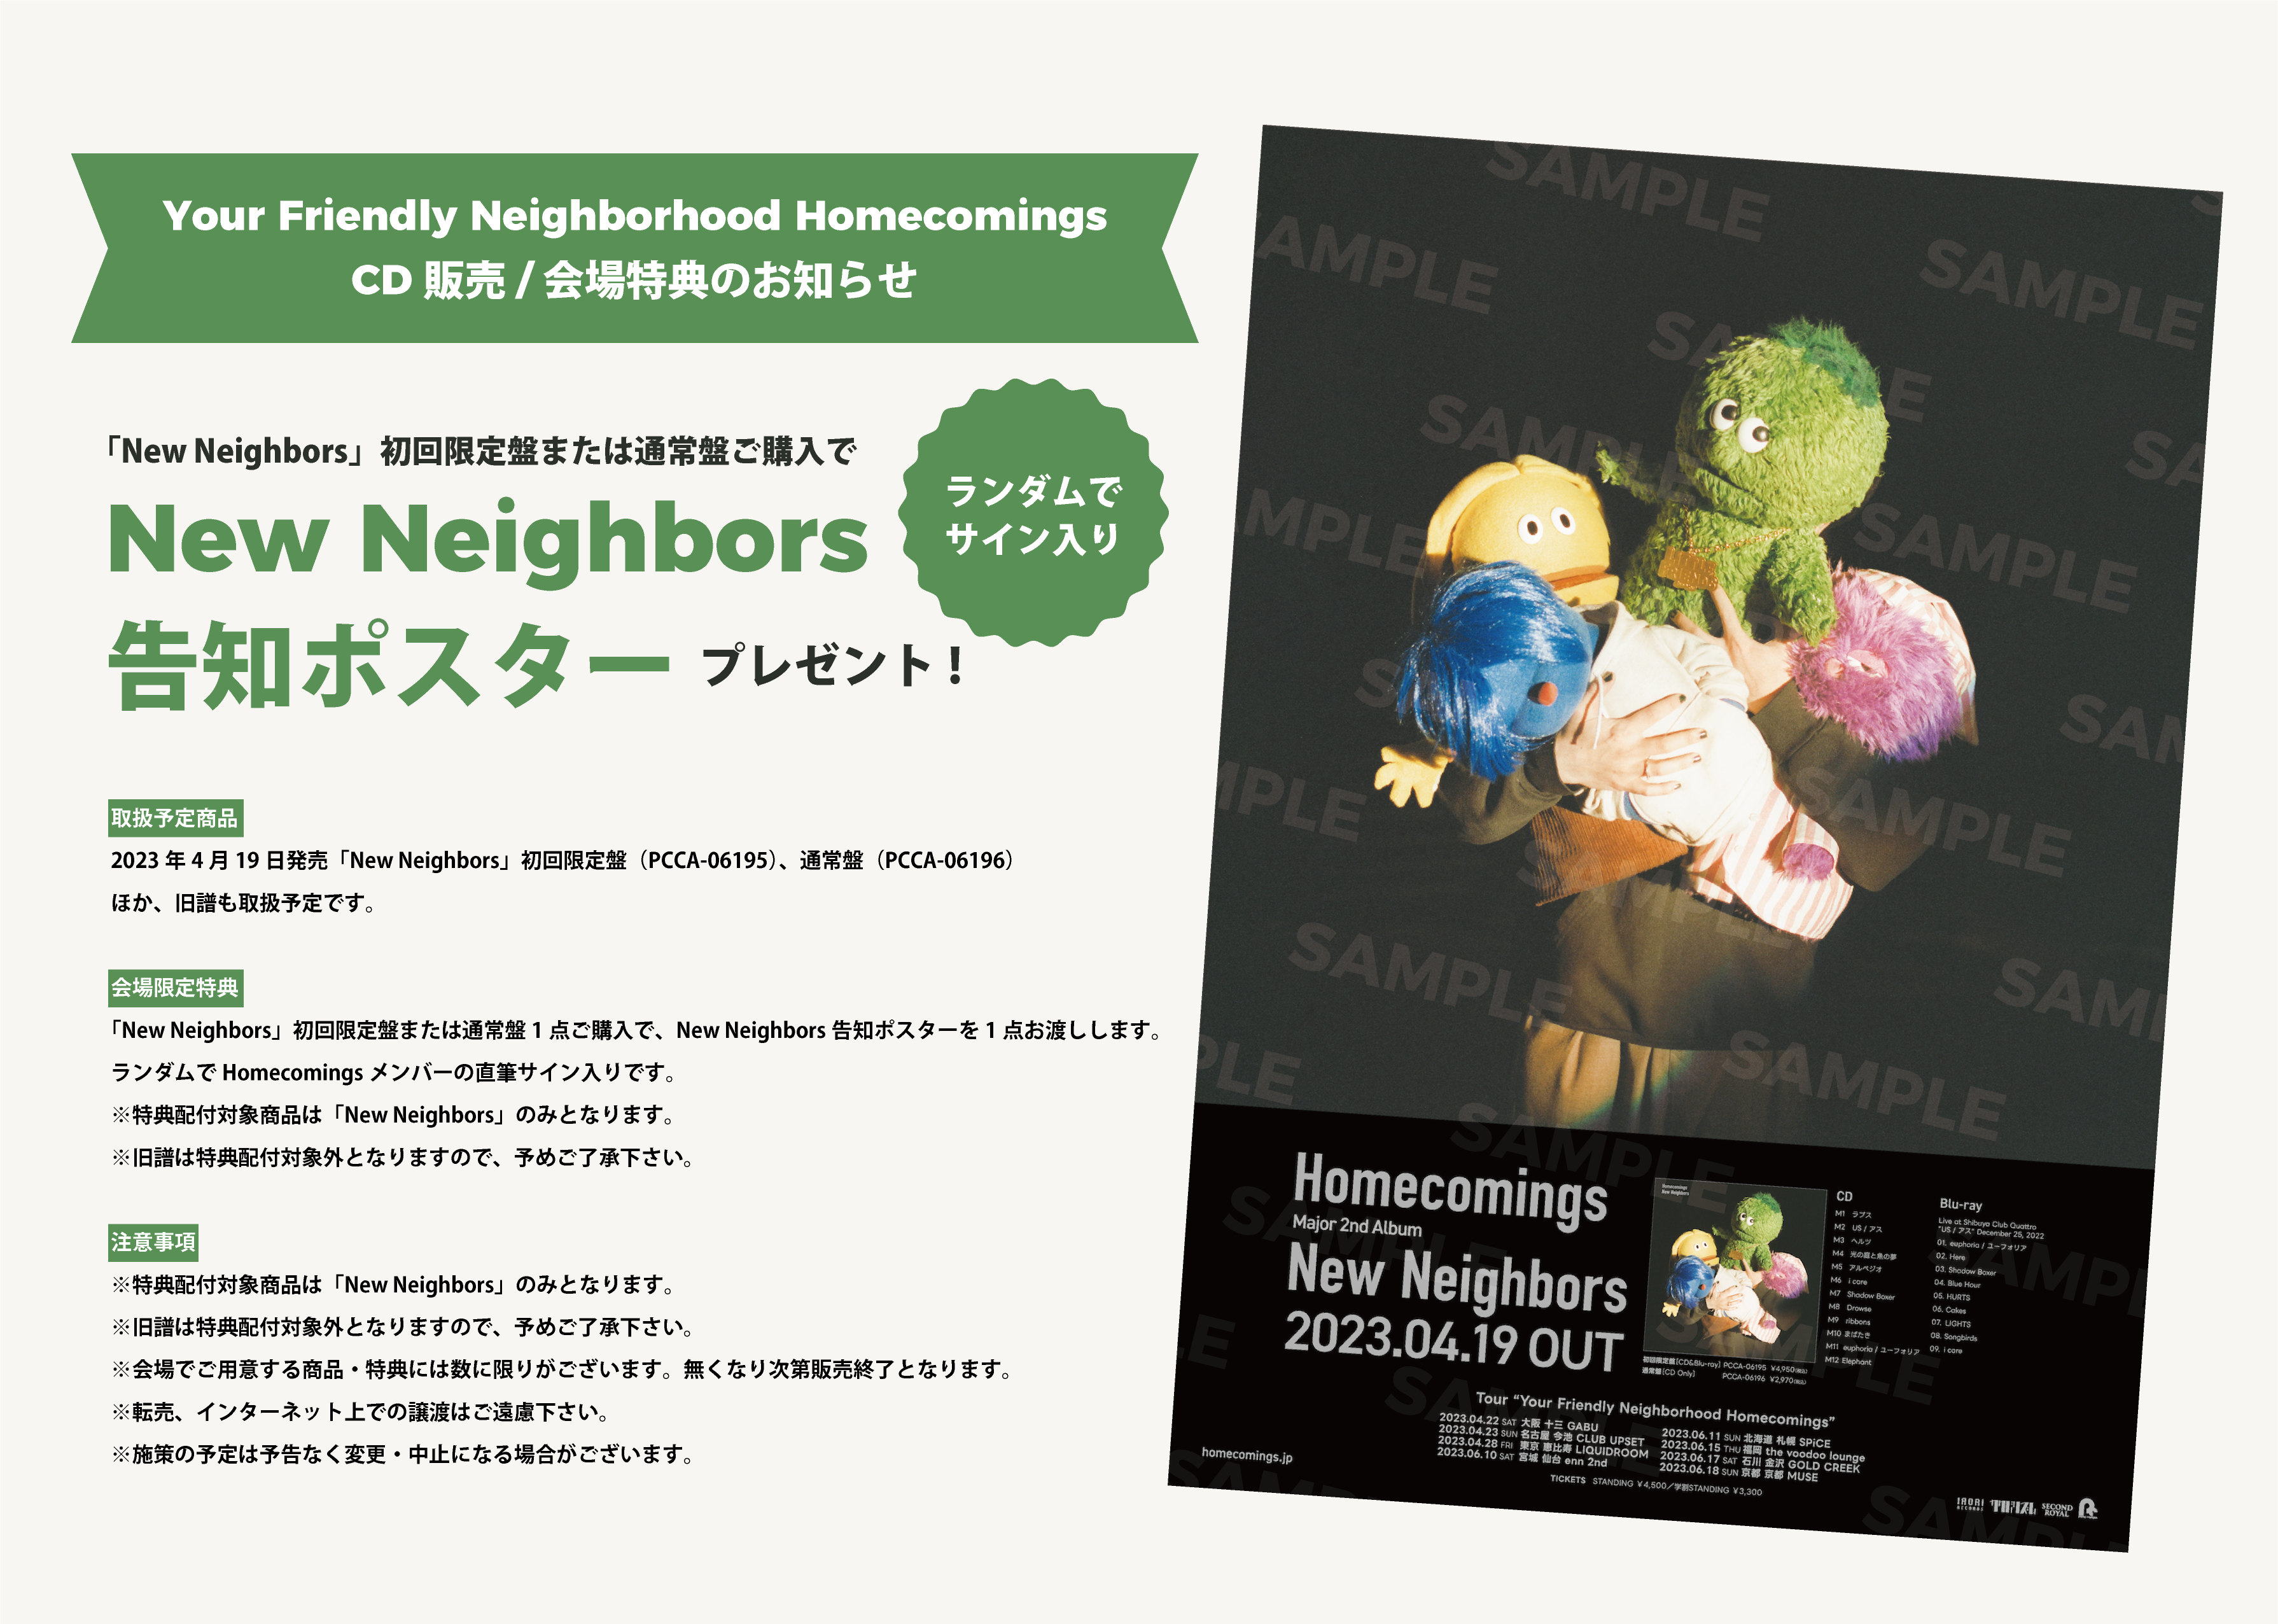 Tour「Your Friendly Neighborhood Homecomings」CD販売のお知らせ - Homecomings